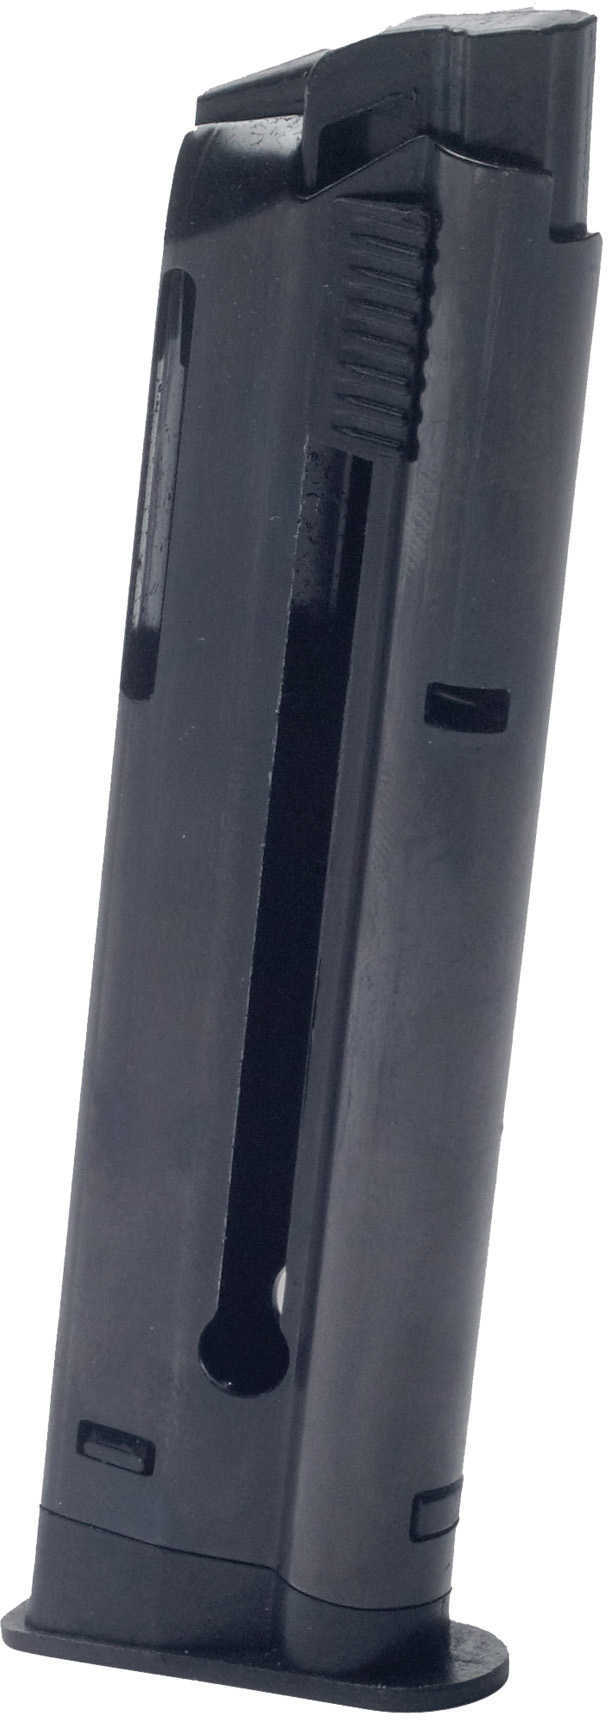 Browning 1911-22 Handgun Magazine Black .22 LR 10/Rd